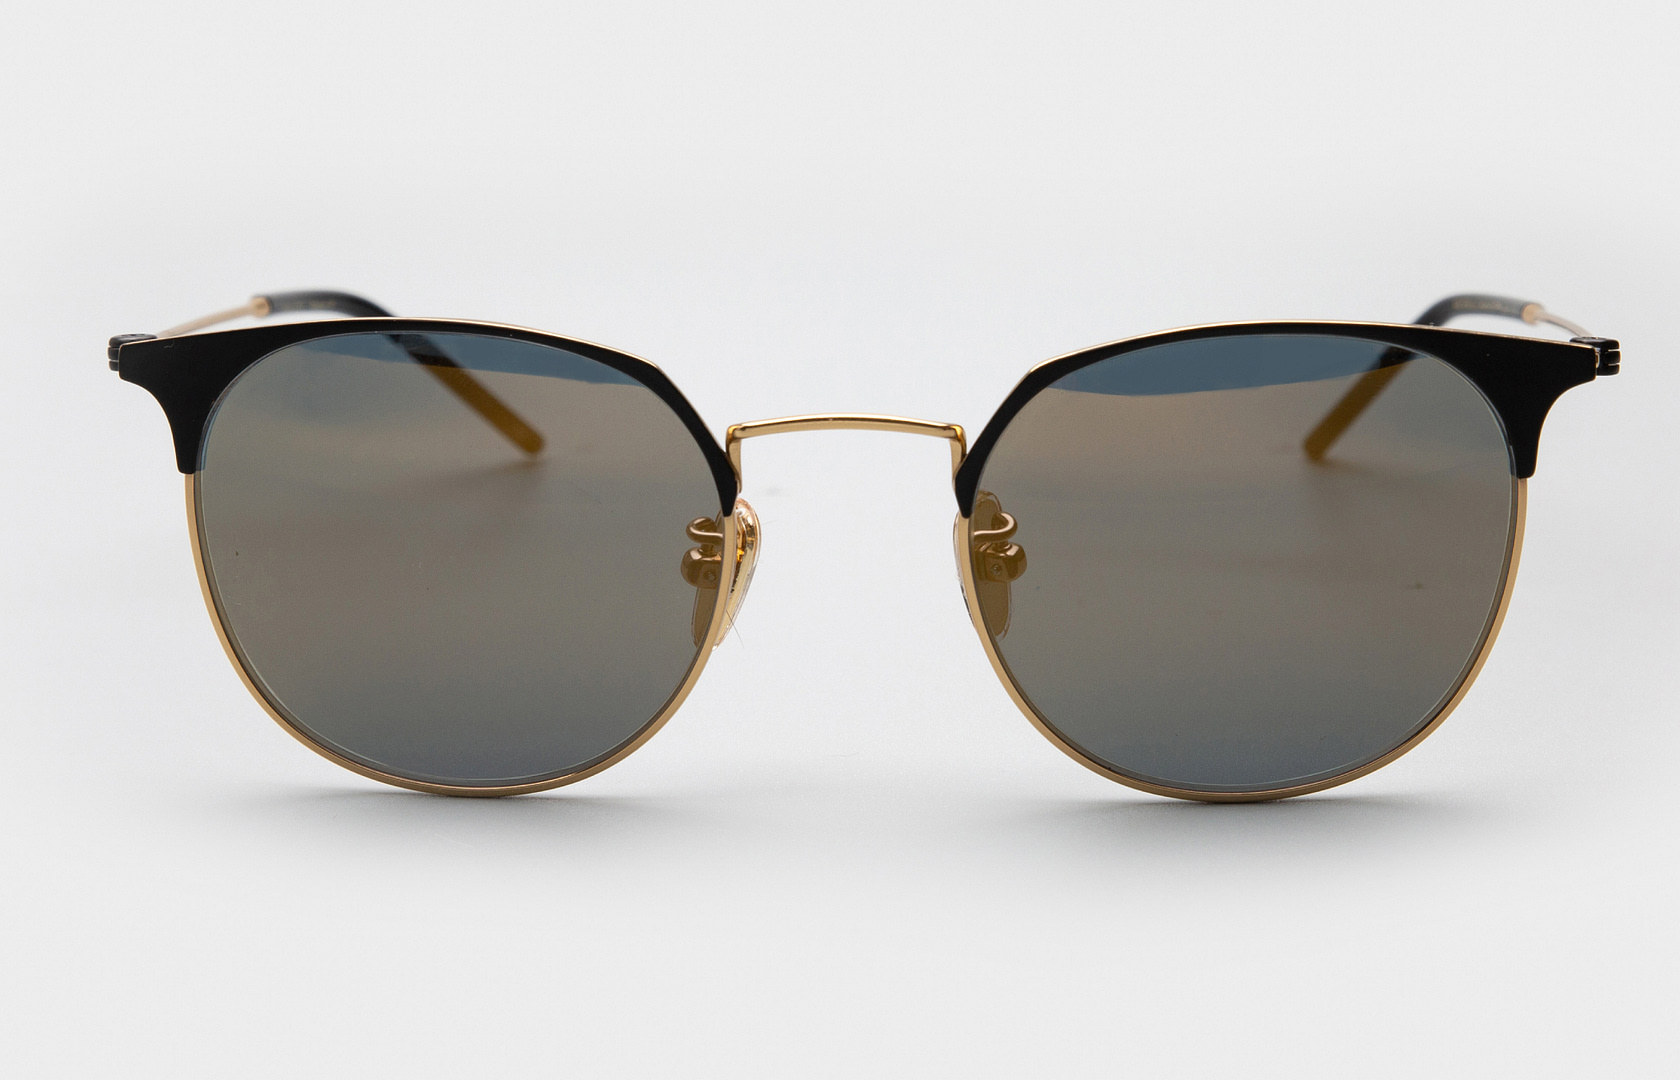 Sunglasses Trends 2022